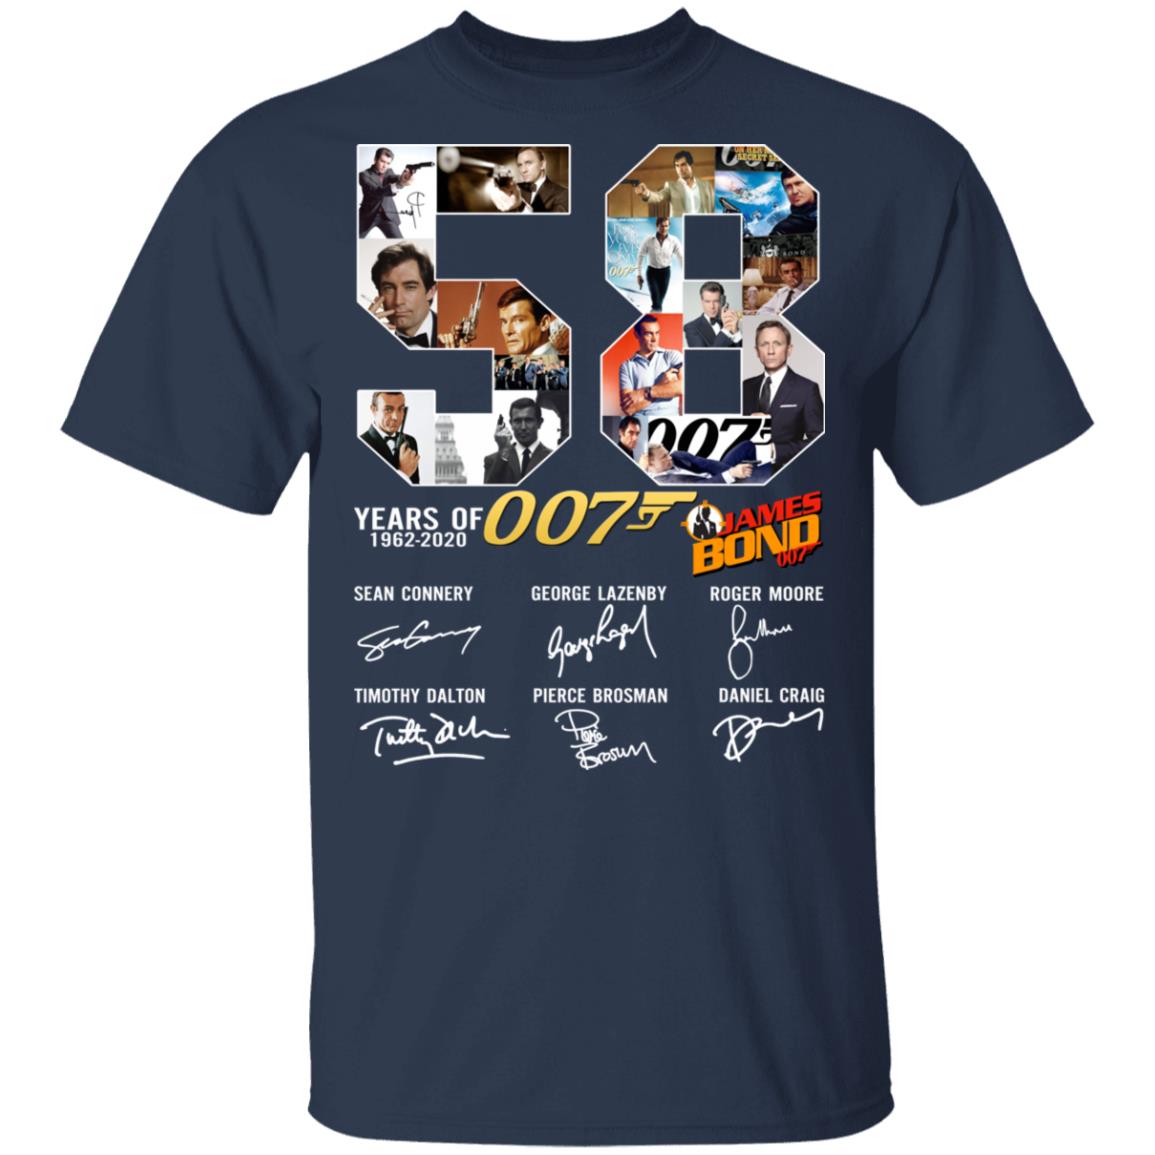 58 Years Of James Bond Anniversary Shirt | El Real Tex-Mex